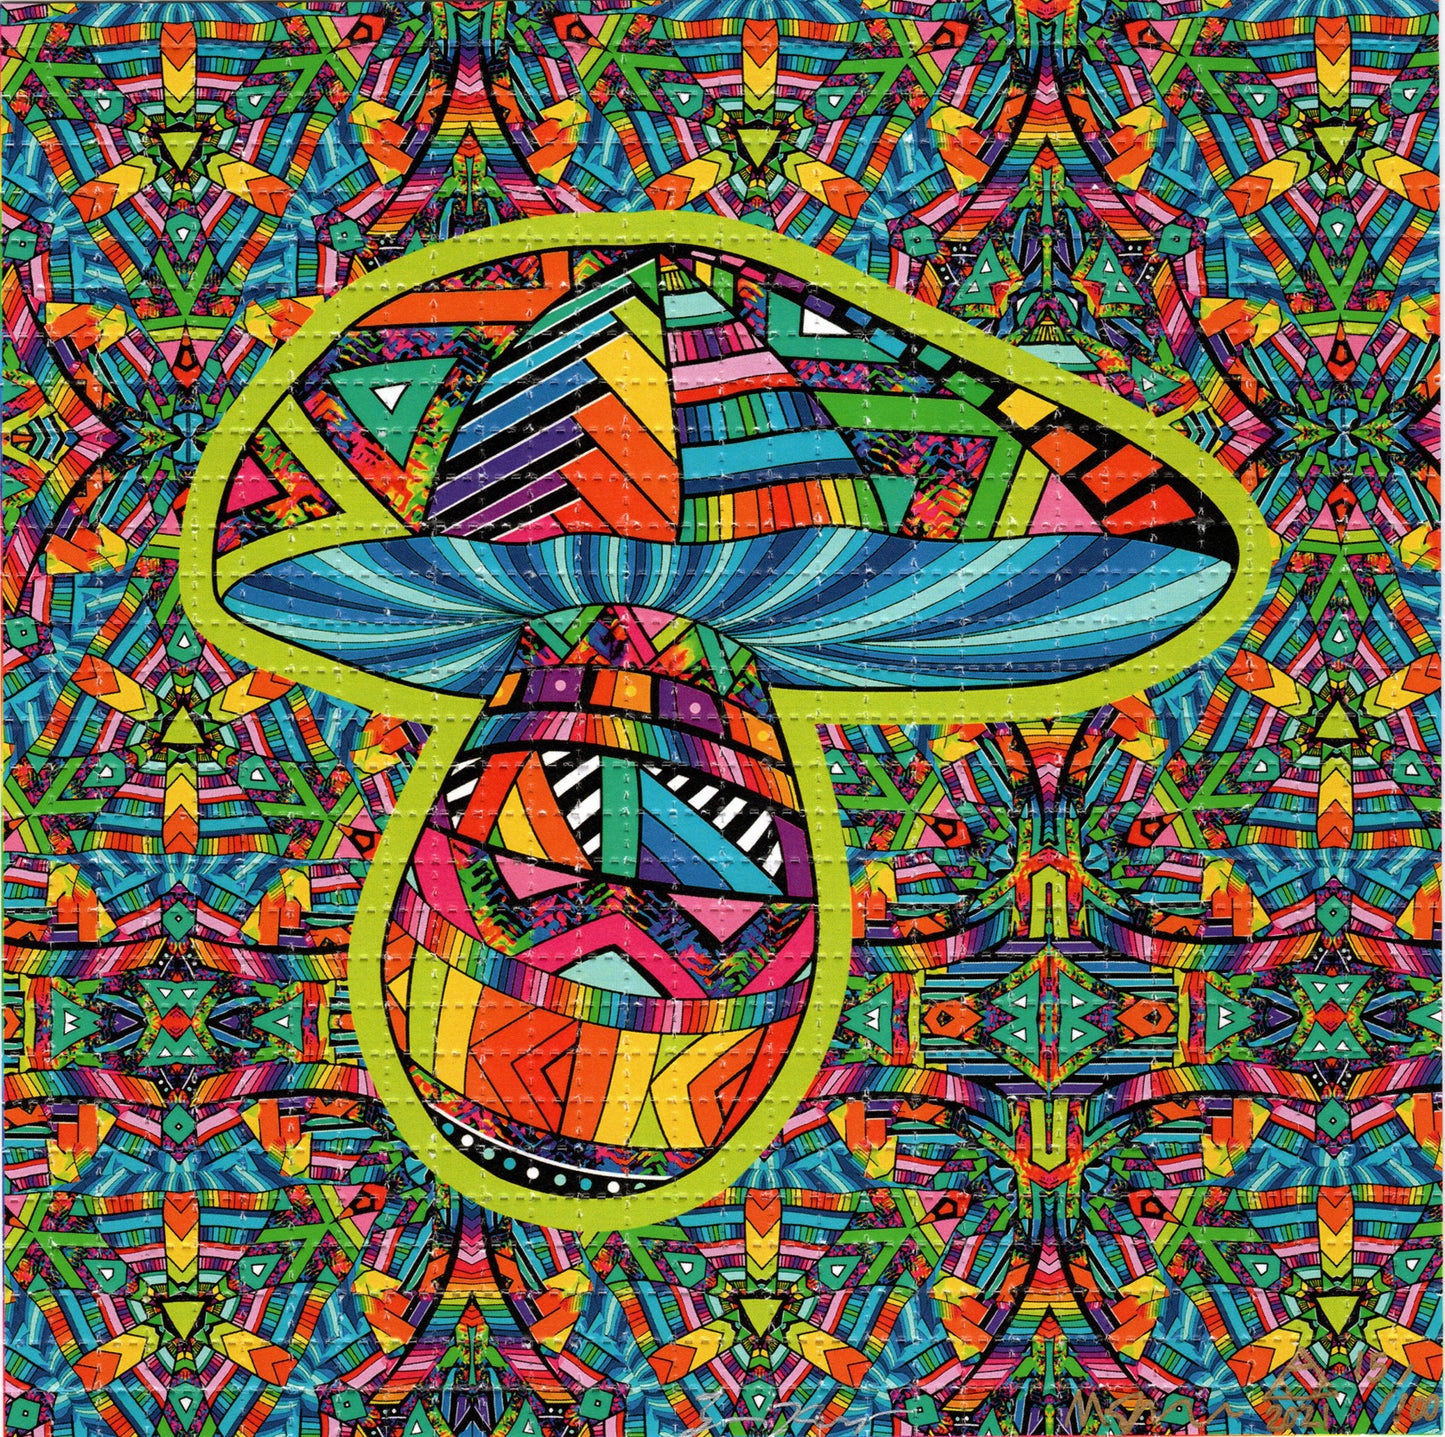 Kalidescope Mushroom by Ashley Austin SIGNED Limited Edition LSD blotter art print